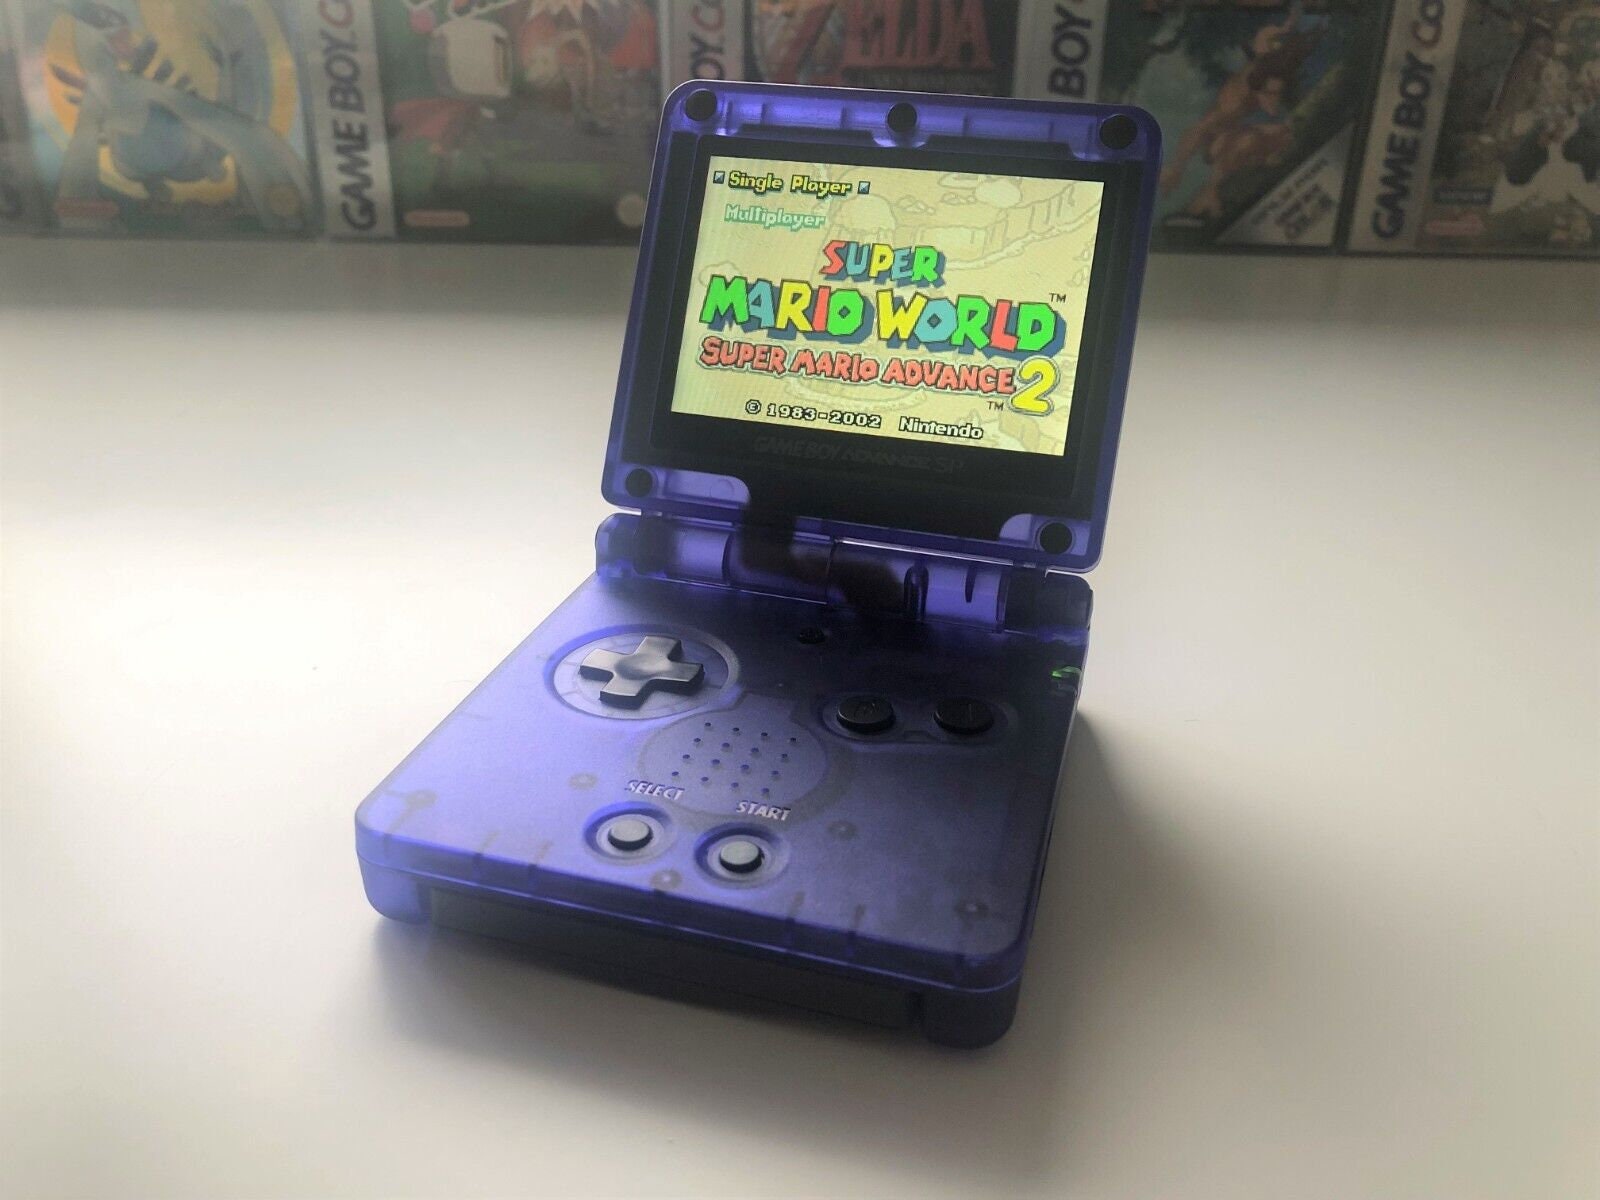 Cable d'alimentation pour Game Boy Advance occasion - Retro Game Place